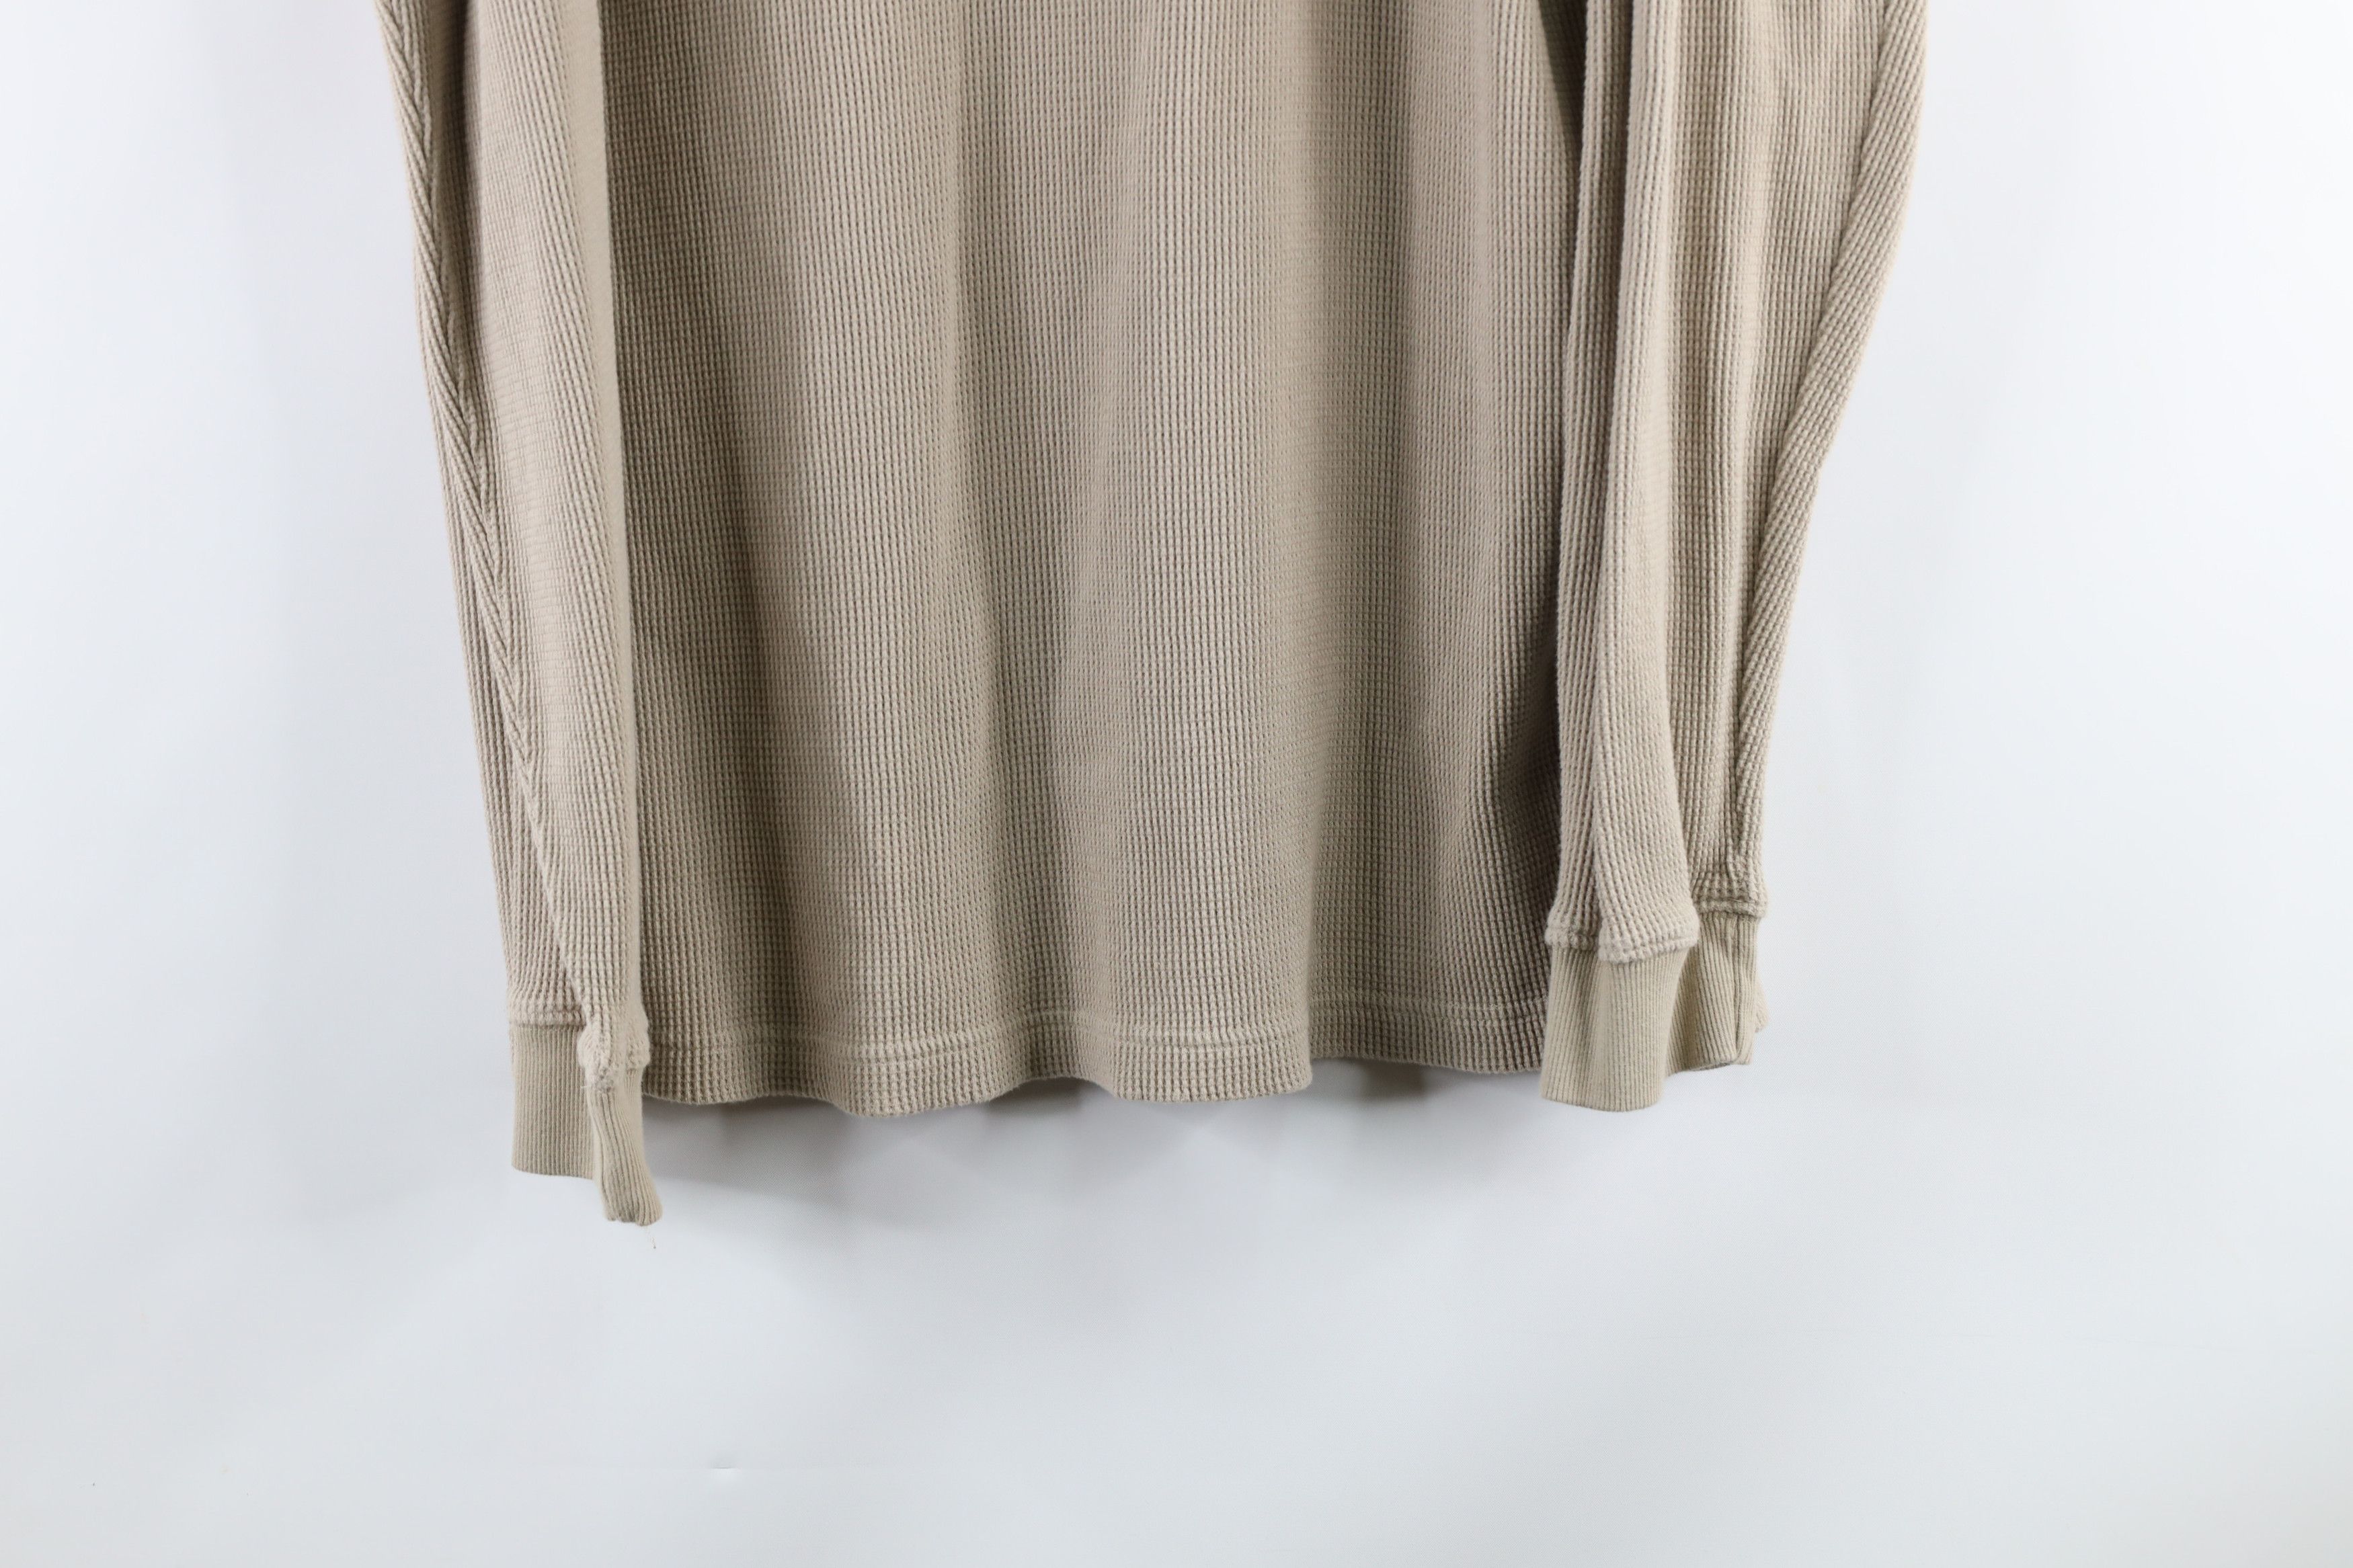 Vintage Vintage Cabelas Thermal Knit Long Sleeve Henley Shirt Beige Size US M / EU 48-50 / 2 - 7 Preview